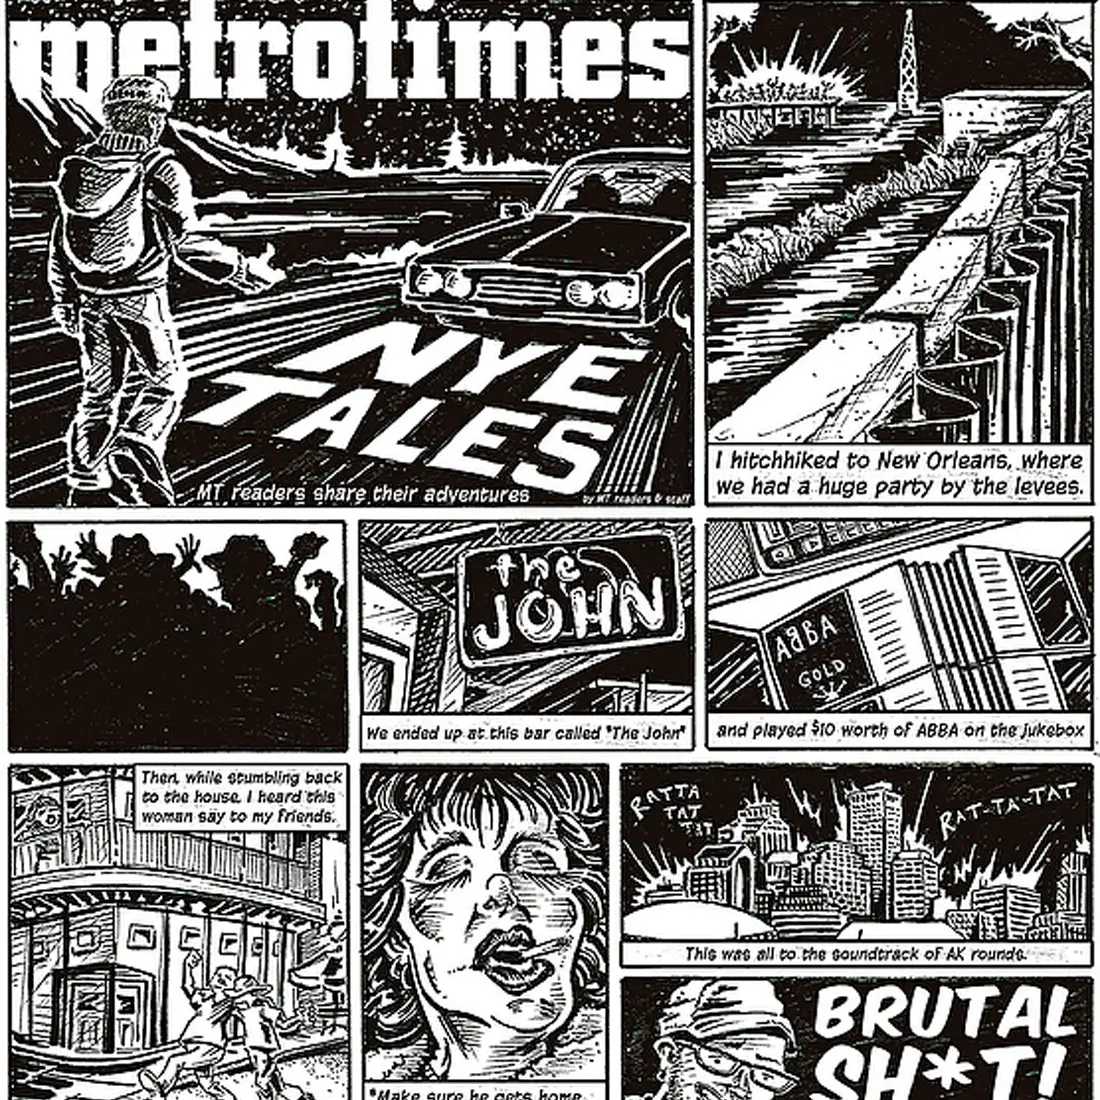 Metrotimes NYE comic illustration by RCi